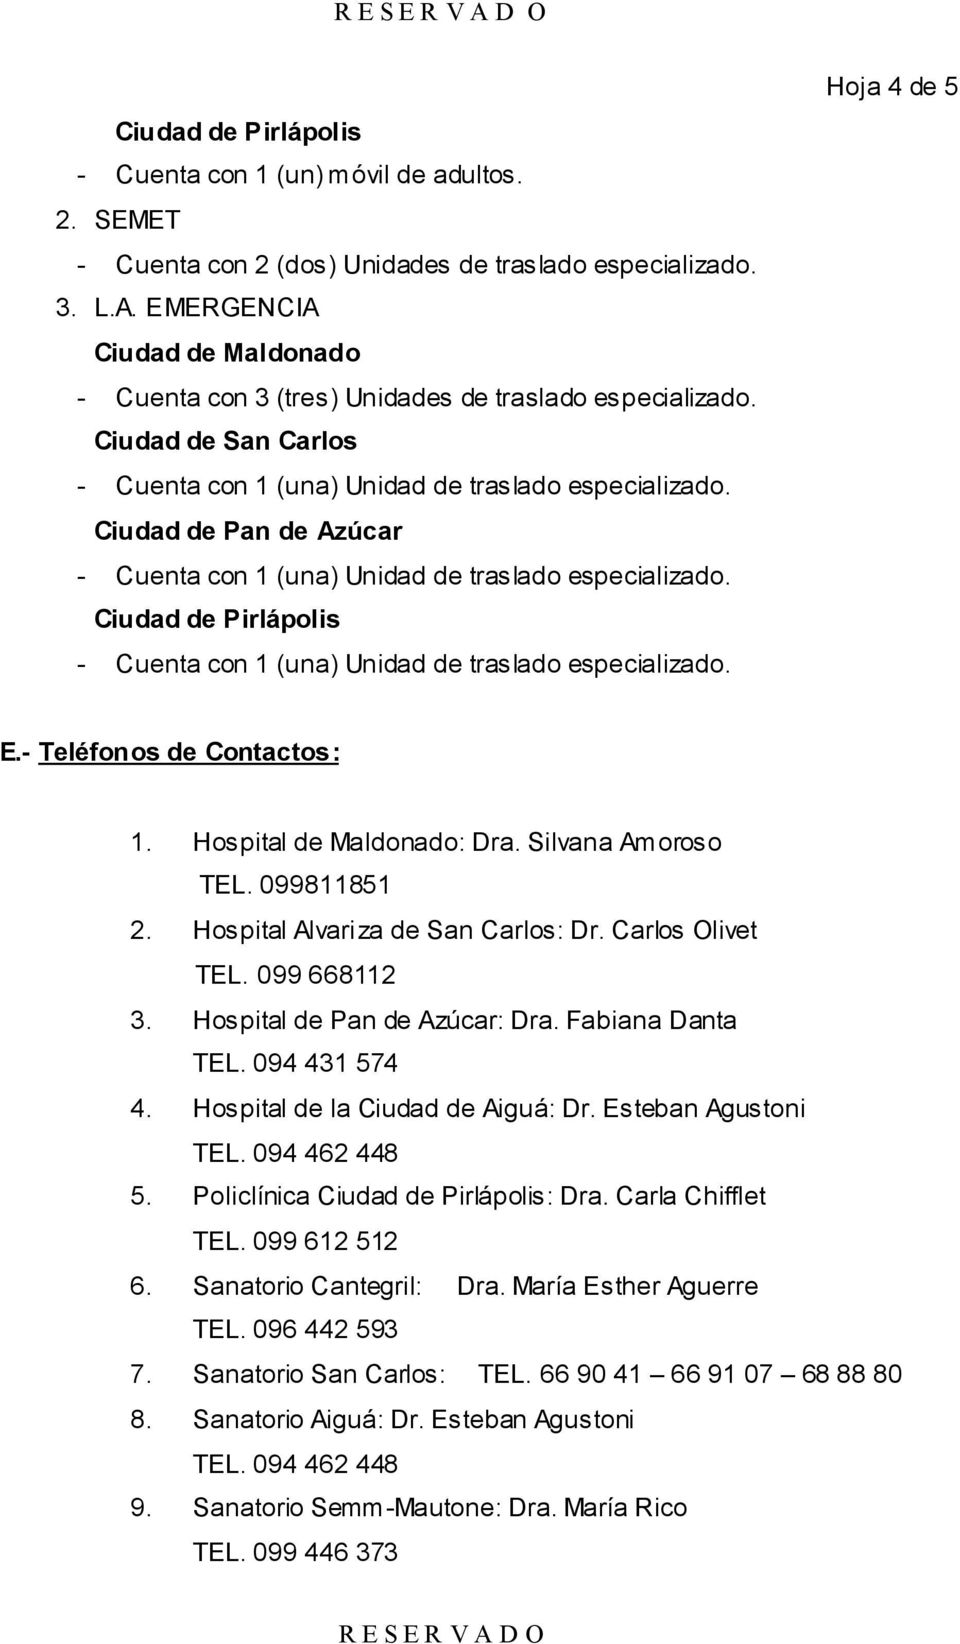 Hospital de Maldonado: Dra. Silvana Amoroso TEL. 099811851 2. Hospital Alvariza de San Carlos: Dr. Carlos Olivet TEL. 099 668112 3. Hospital de Pan de Azúcar: Dra. Fabiana Danta TEL. 094 431 574 4.